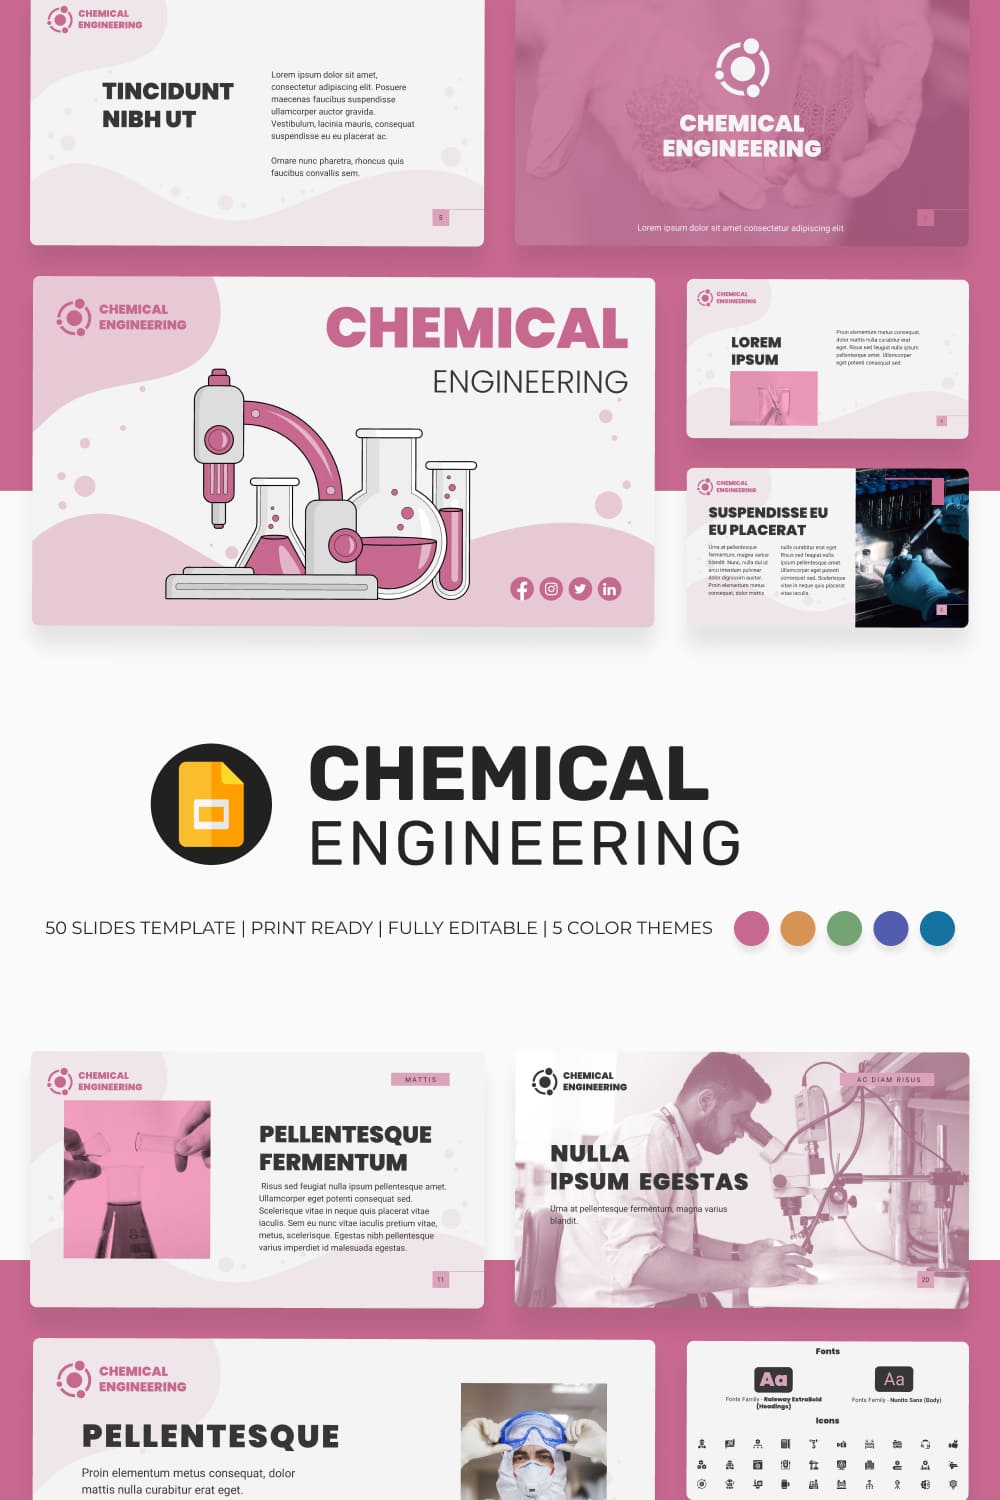 chemical engineering google slides theme pinterest image.